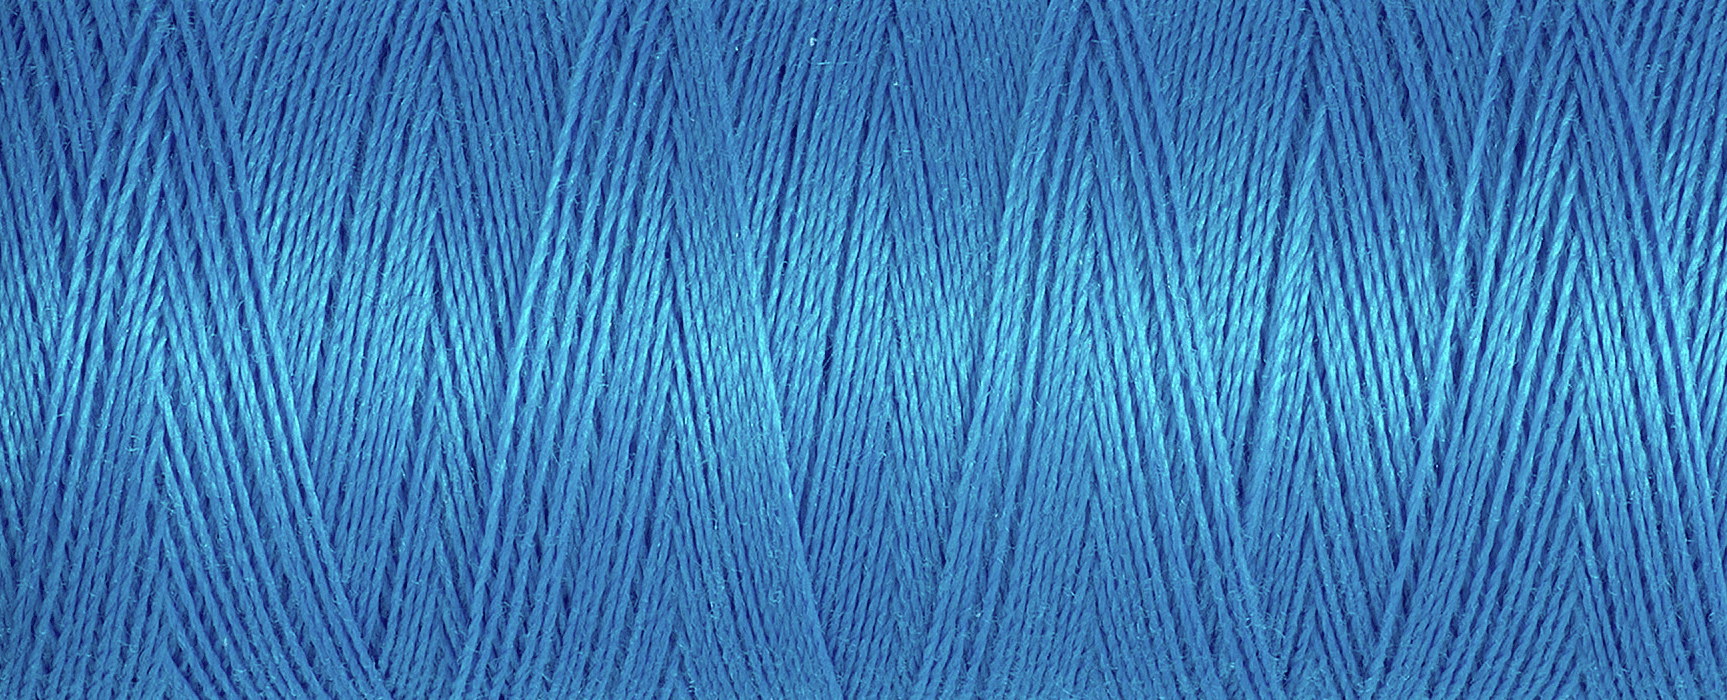 Gutermann Sew-All Thread - 100M (386)-Thread-Jelly Fabrics